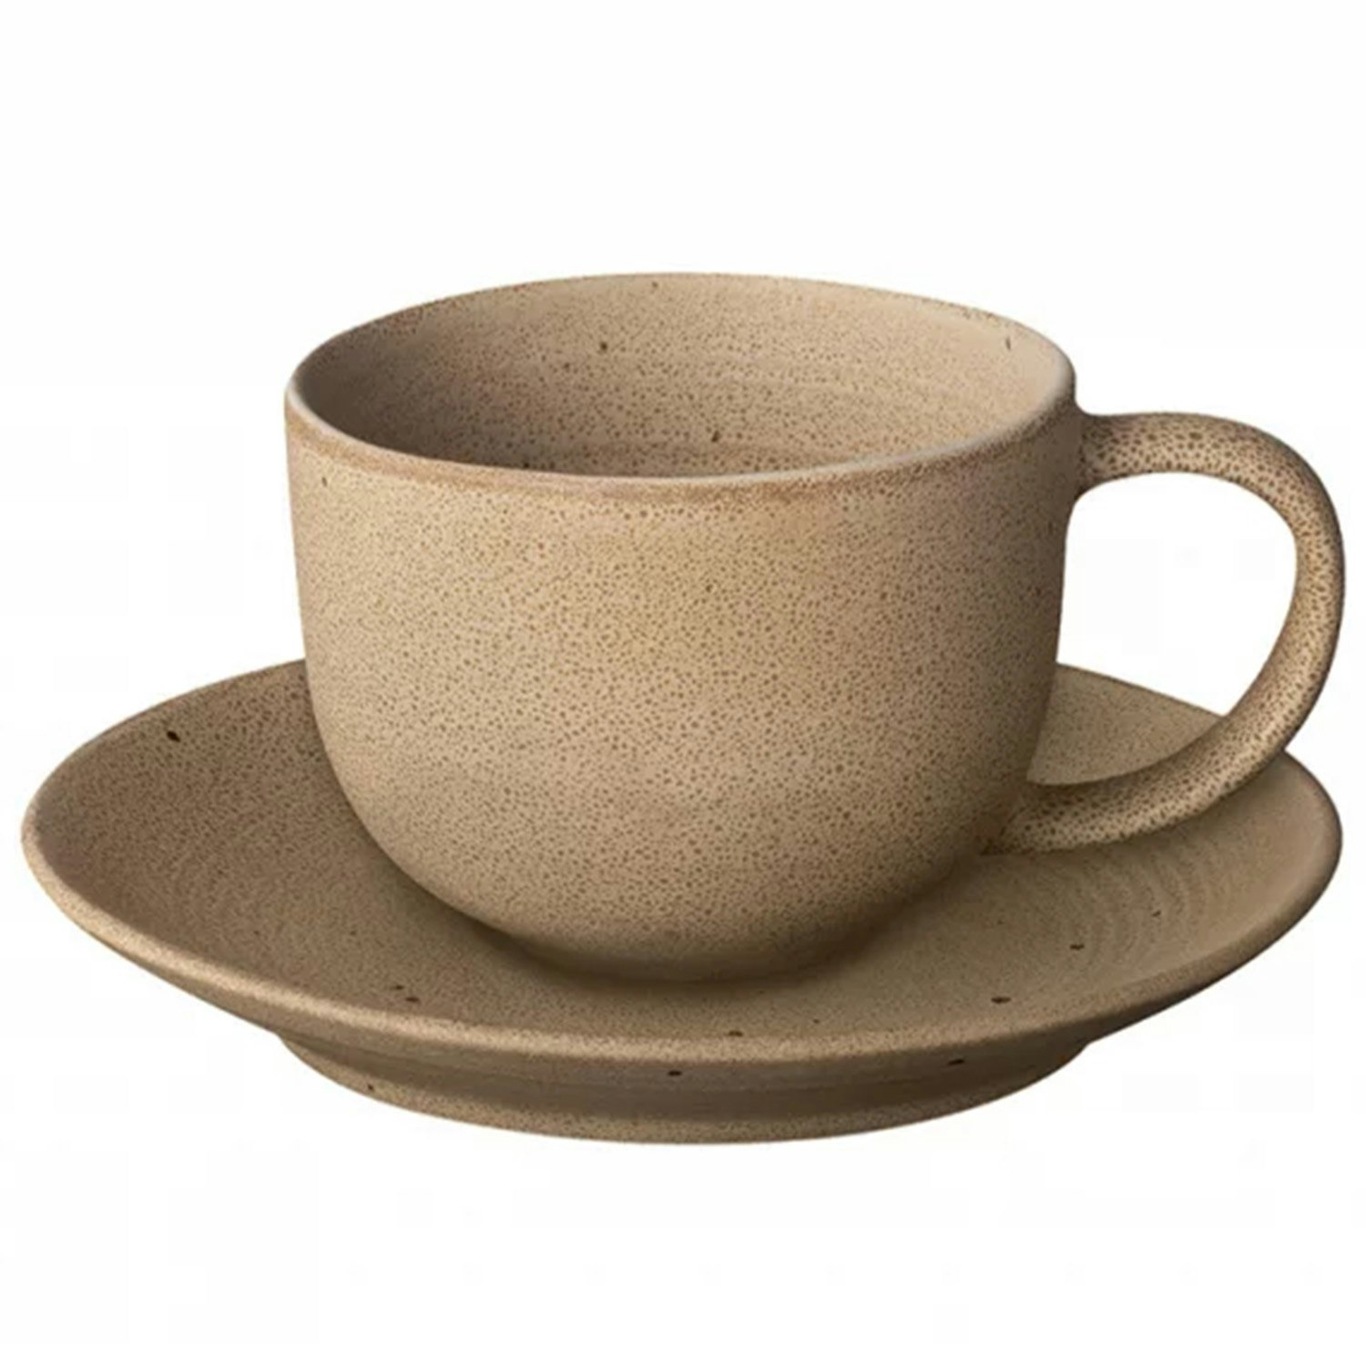 KUMI Coffee Cup With Saucer 2-pack, Fungi